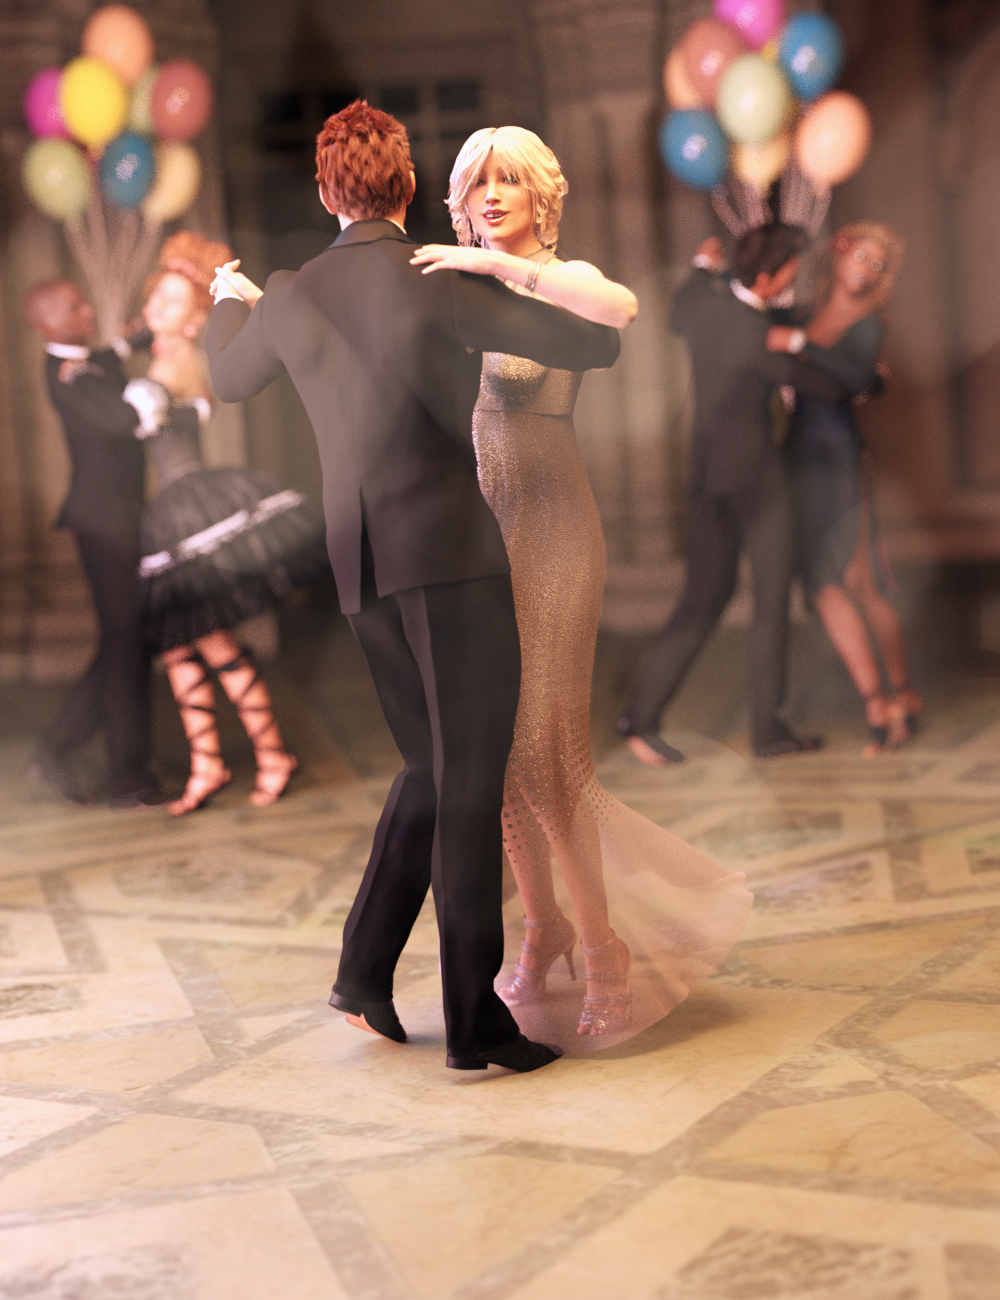 Beautiful Ballroom Dance Couple Dance Pose Stock Photo 574439092 |  Shutterstock